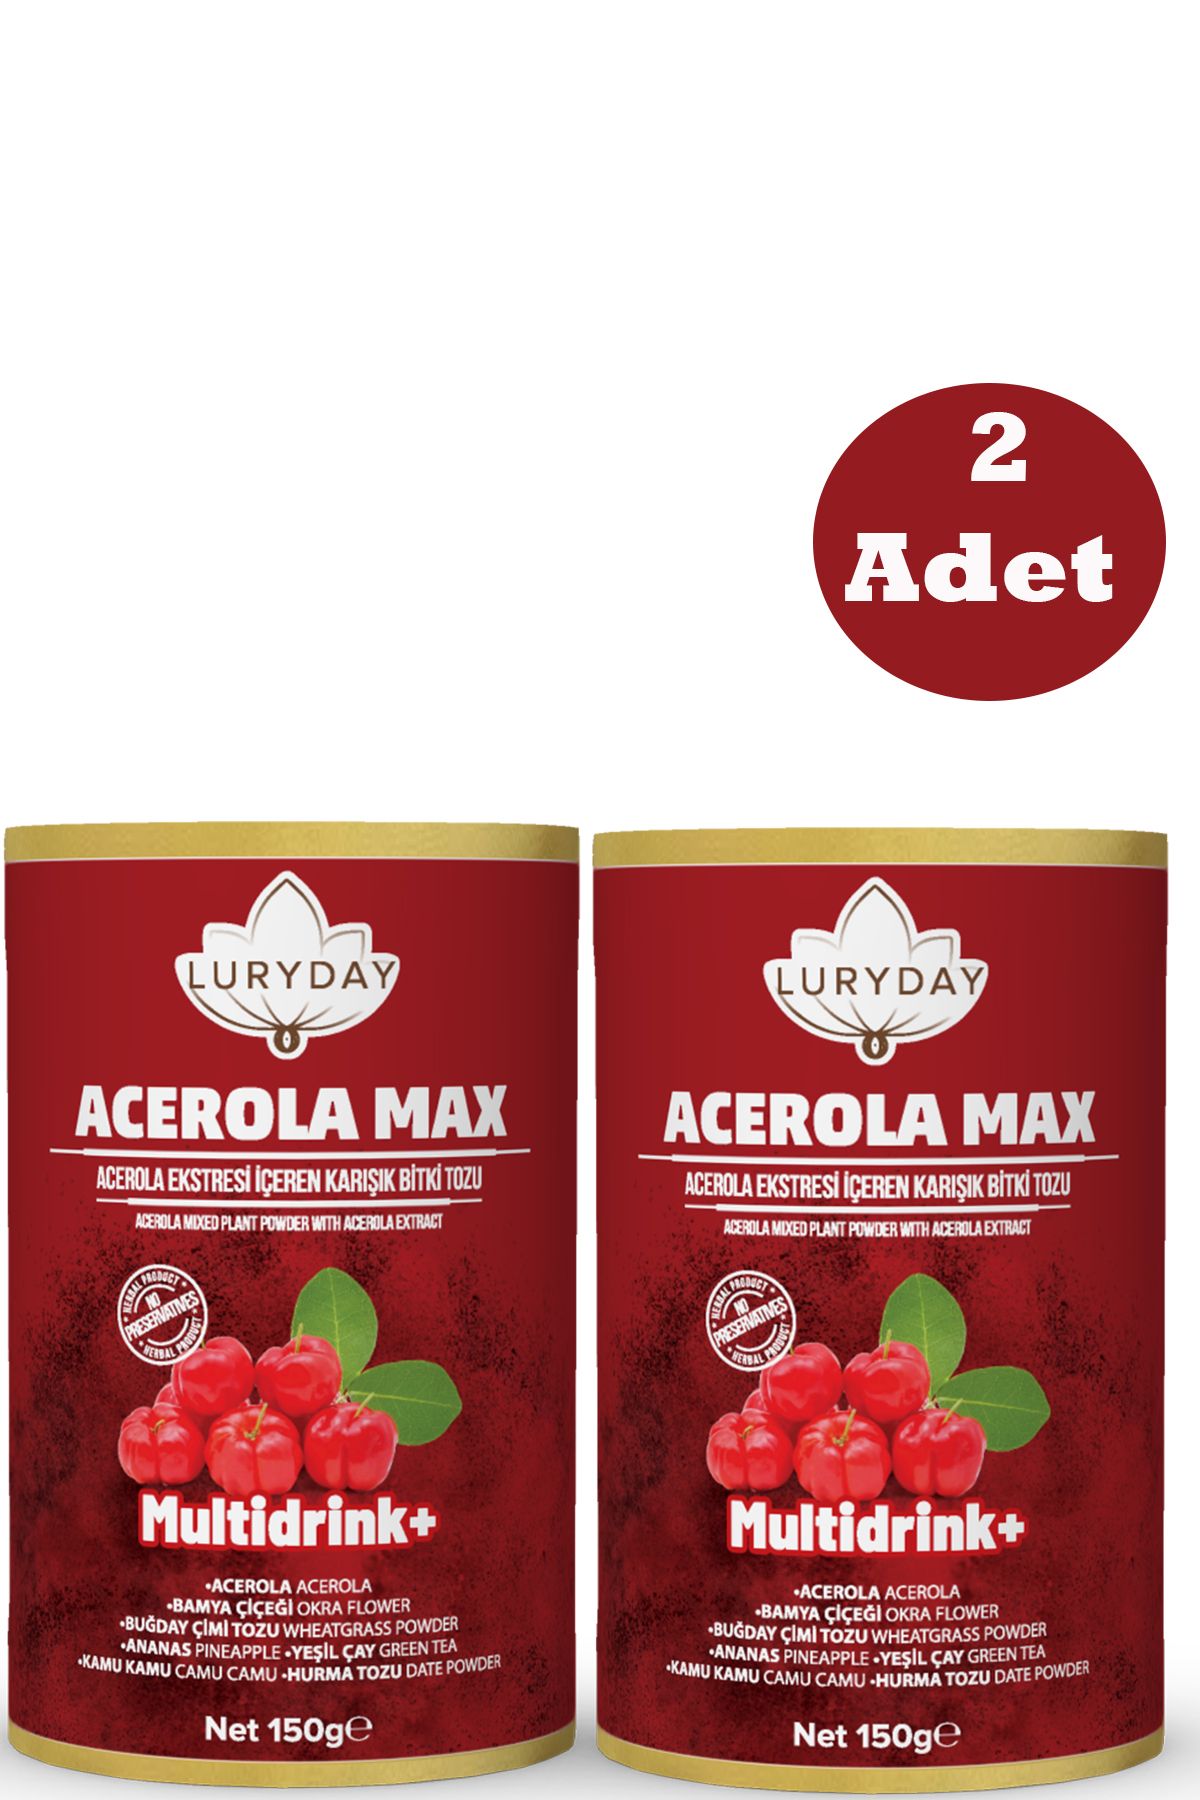 LURYDAY 2 Adet - Aserola Max Acerola Ekstresi Içeren Karışık Bitki Tozu